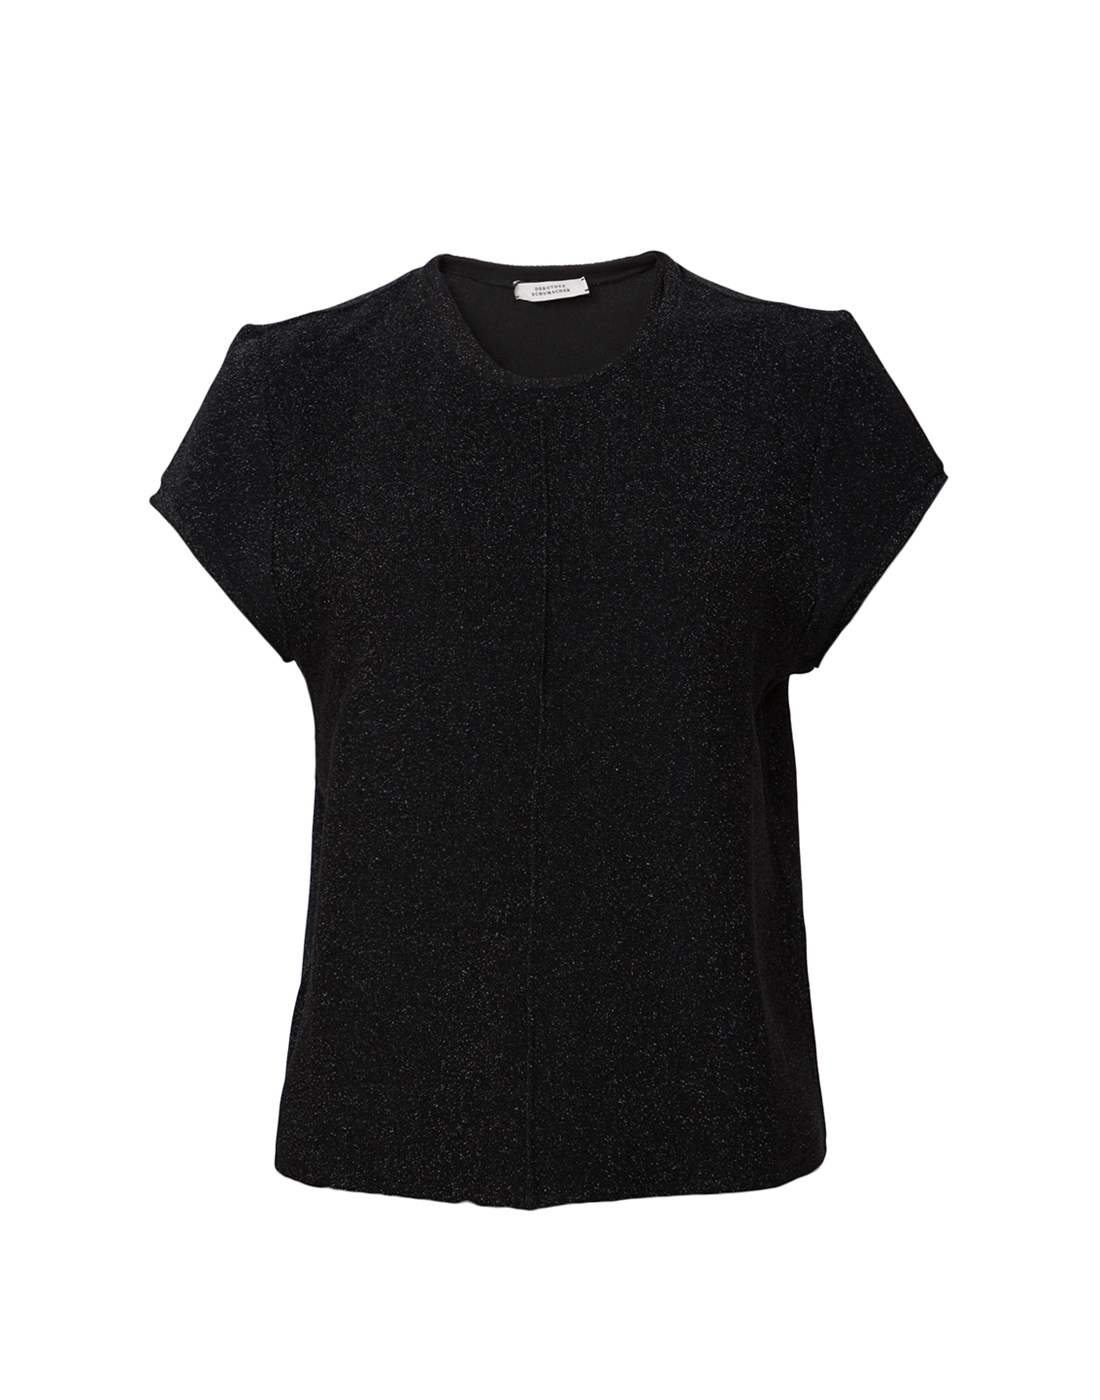 Женская черная футболка Dorothee Schumacher S923601/999-1